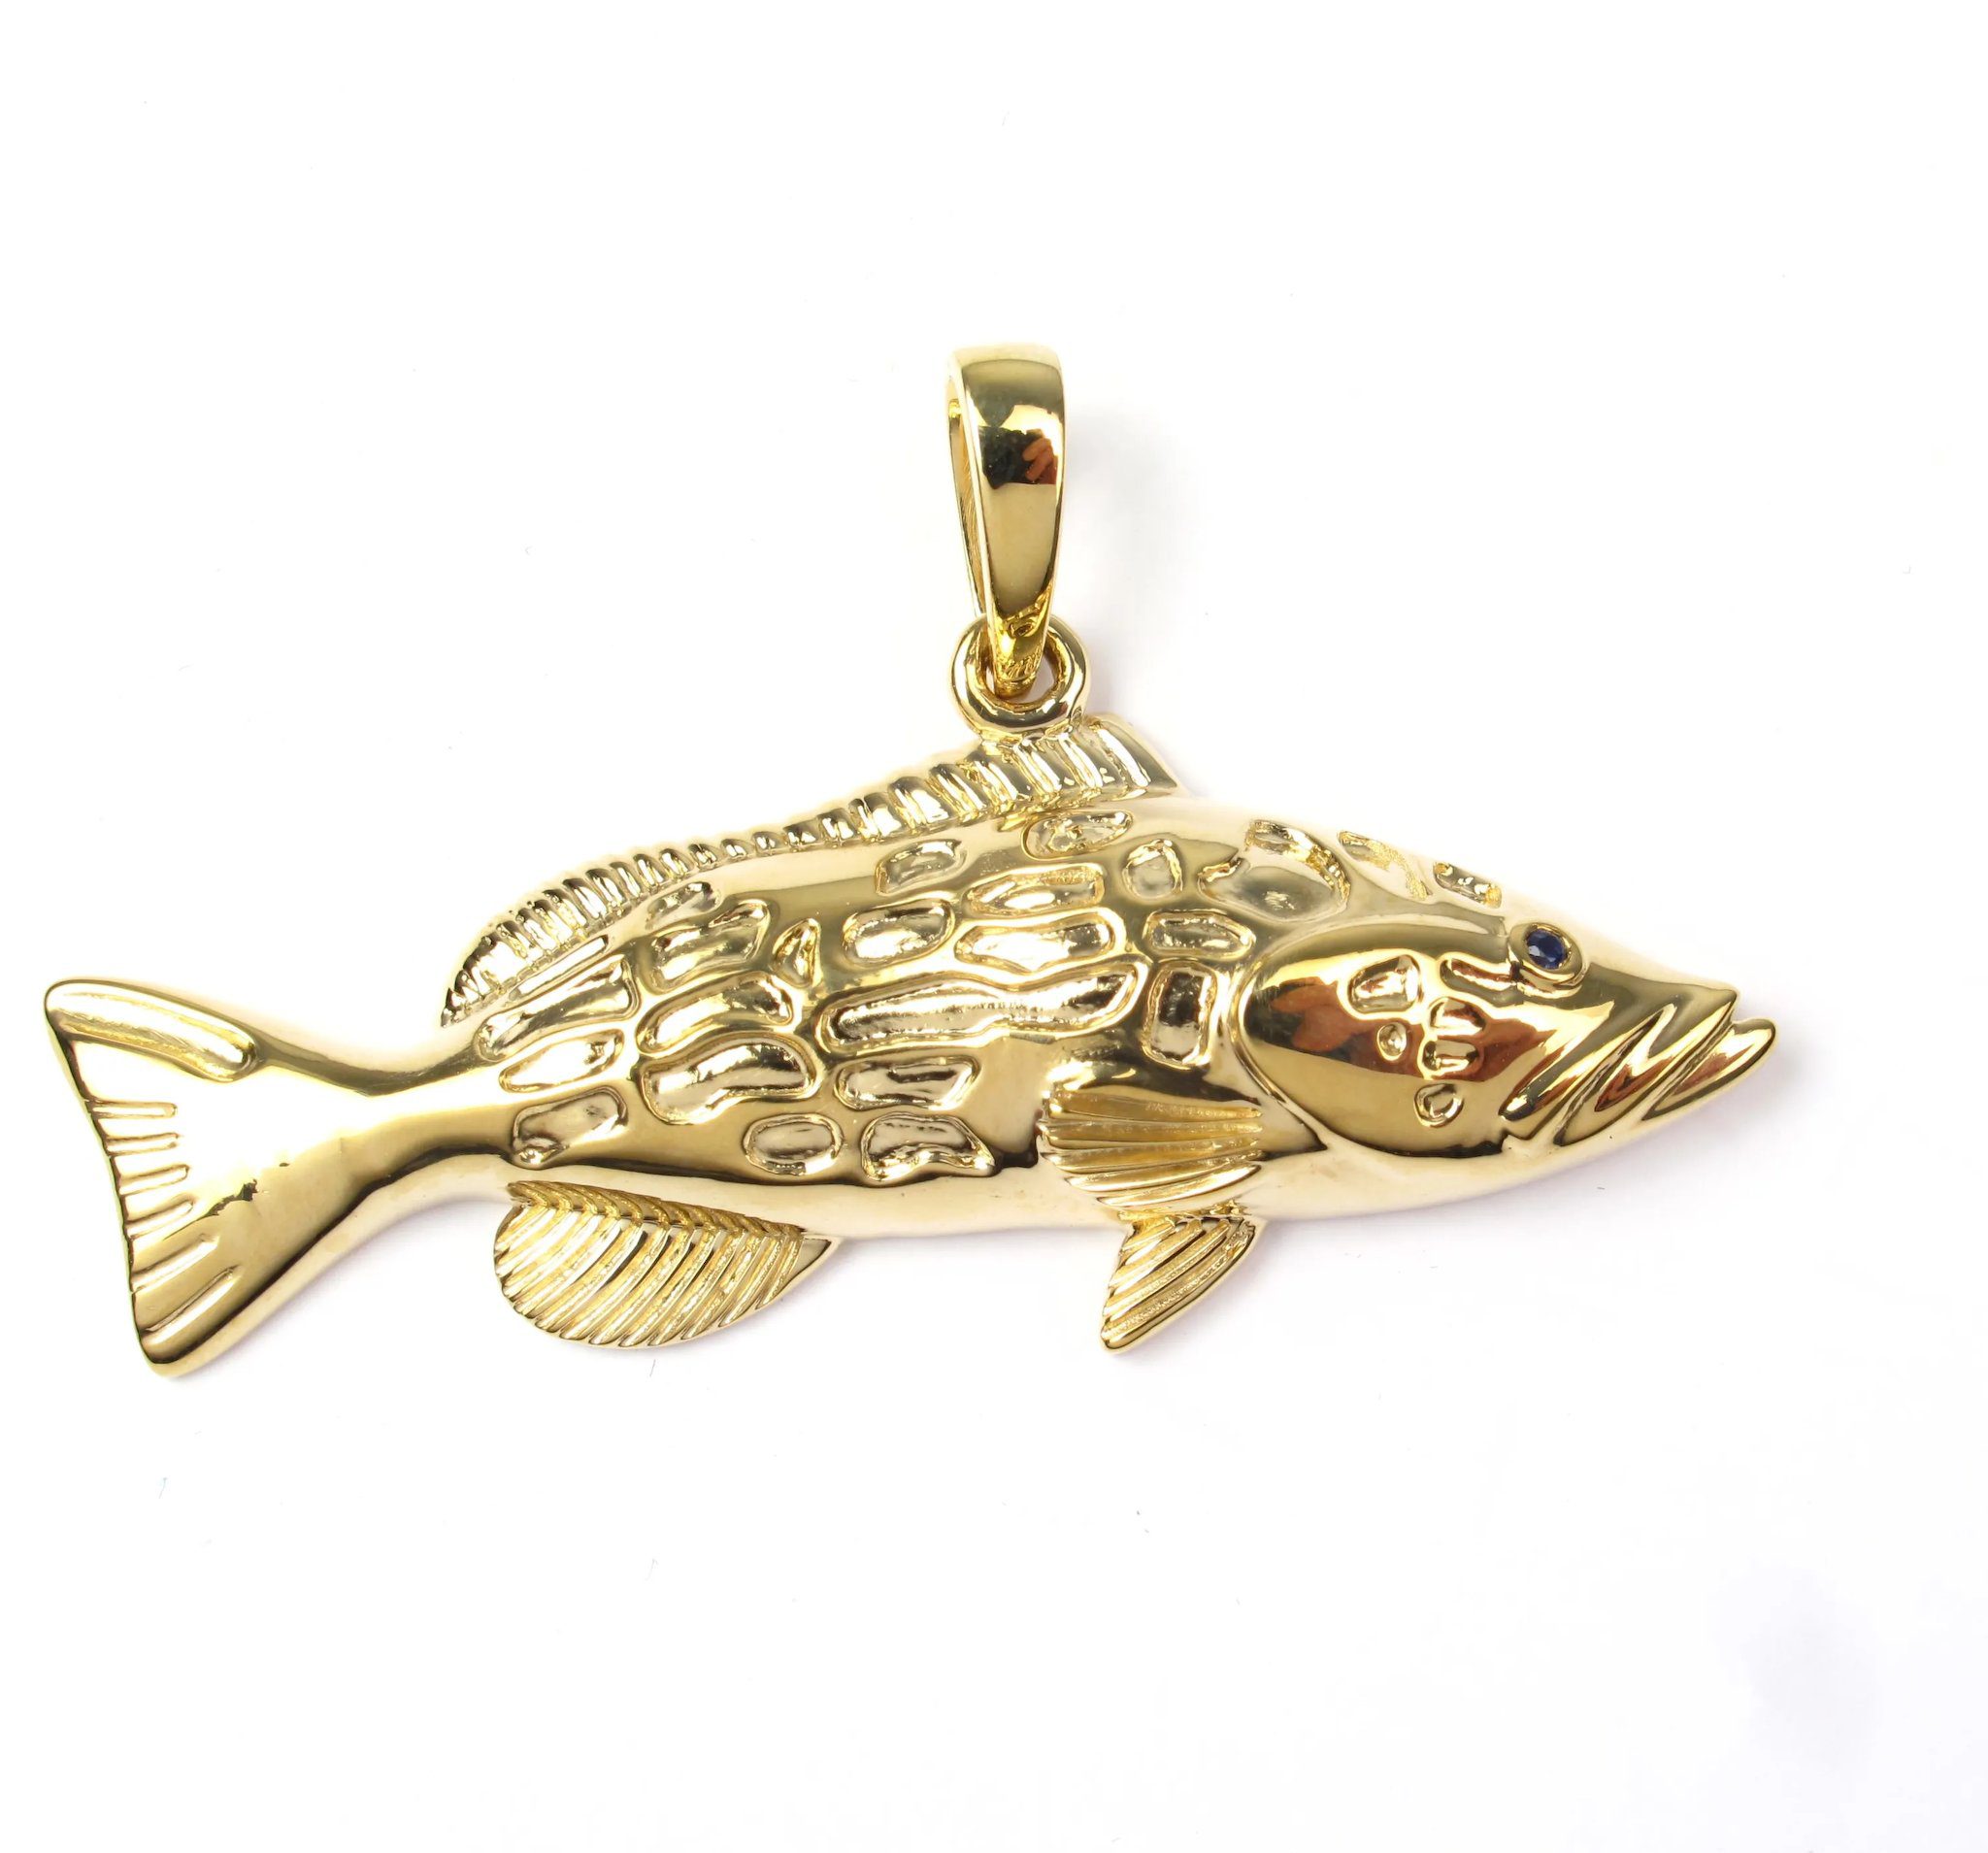 https://arnoldjewelers.com/wp-content/uploads/2022/11/Custom-Nautical-Grouper-Fish-Pendant-14k-full-1o-2048-398474ab-f.jpg